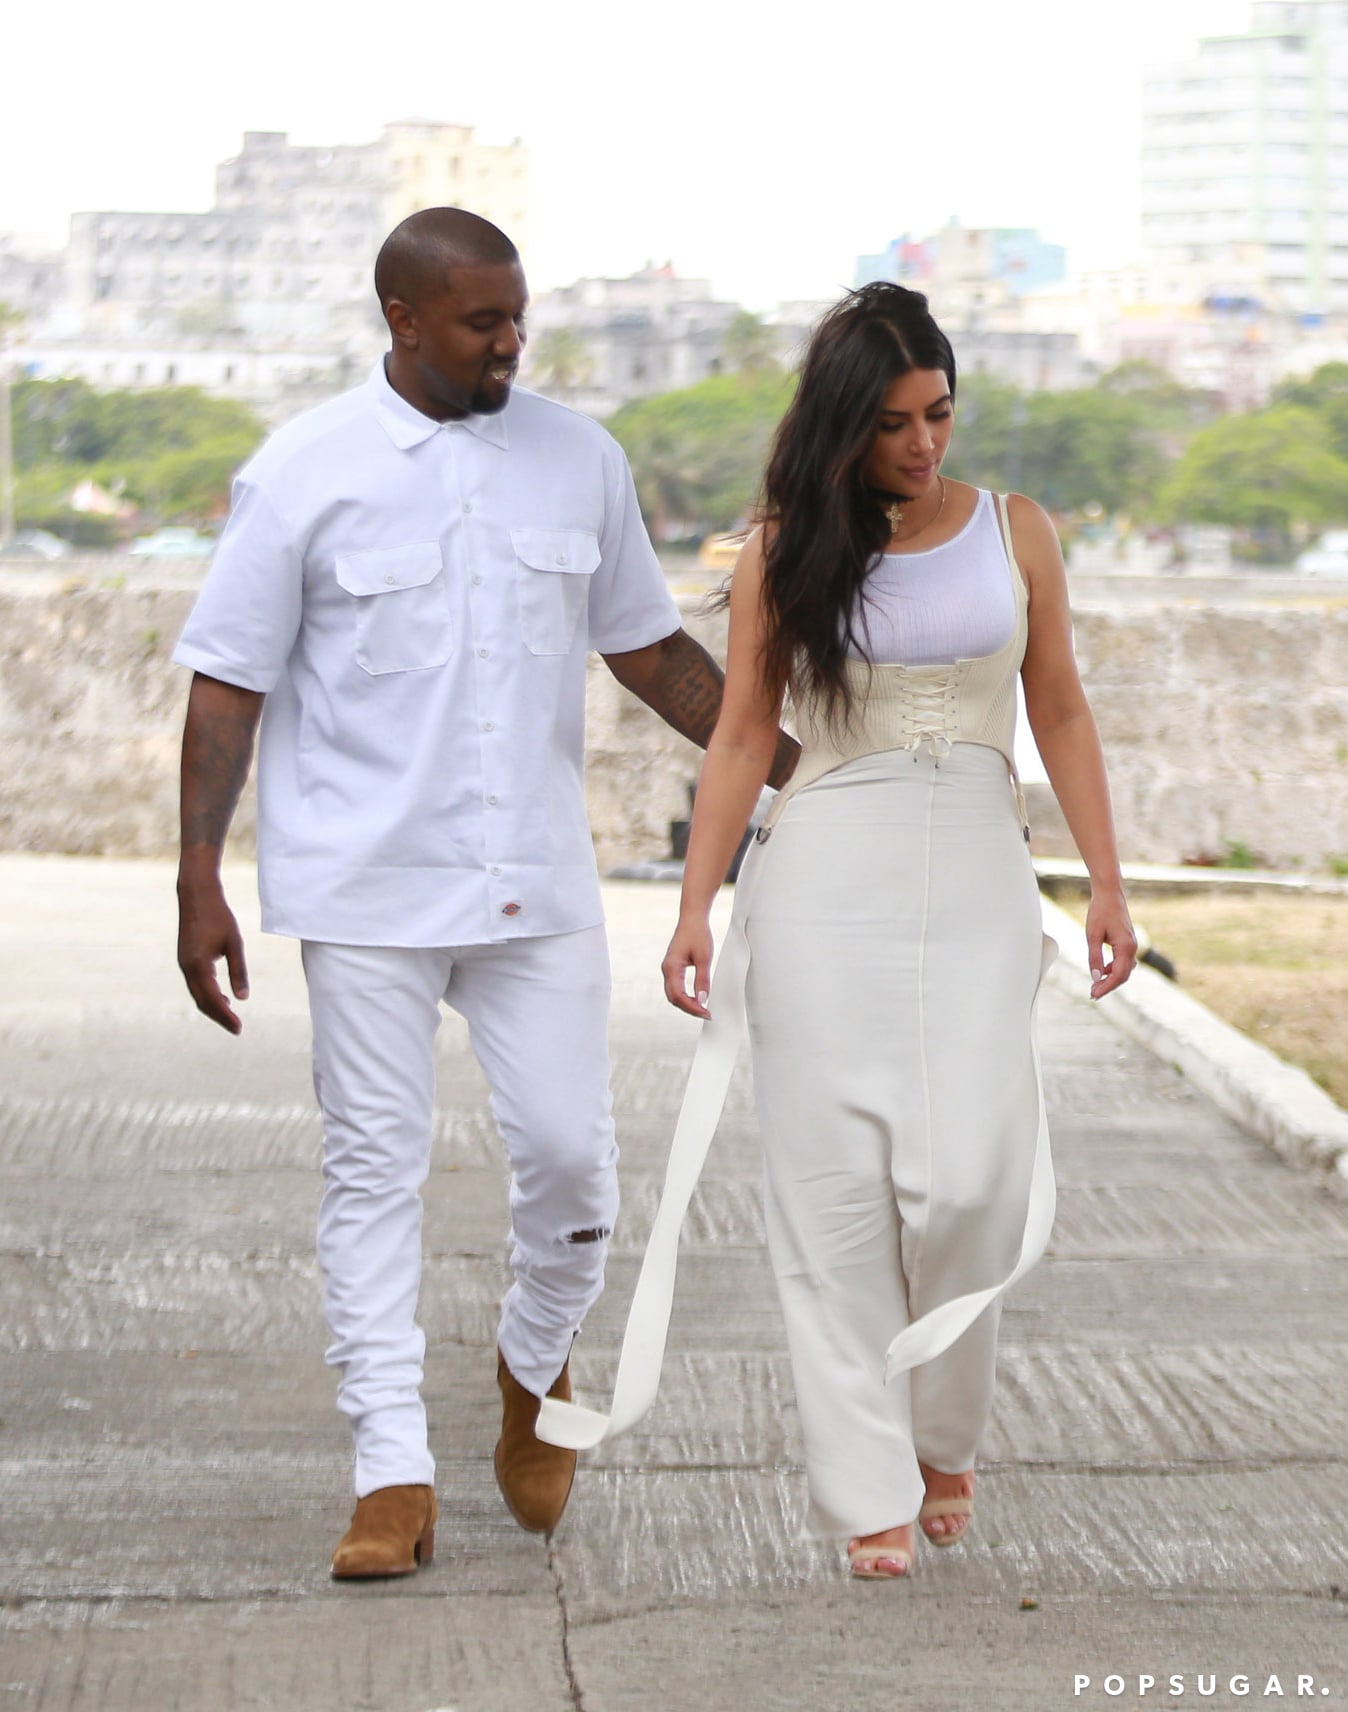 Kim Kardashian and Kanye West Wearing White in Cuba | POPSUGAR Fashion